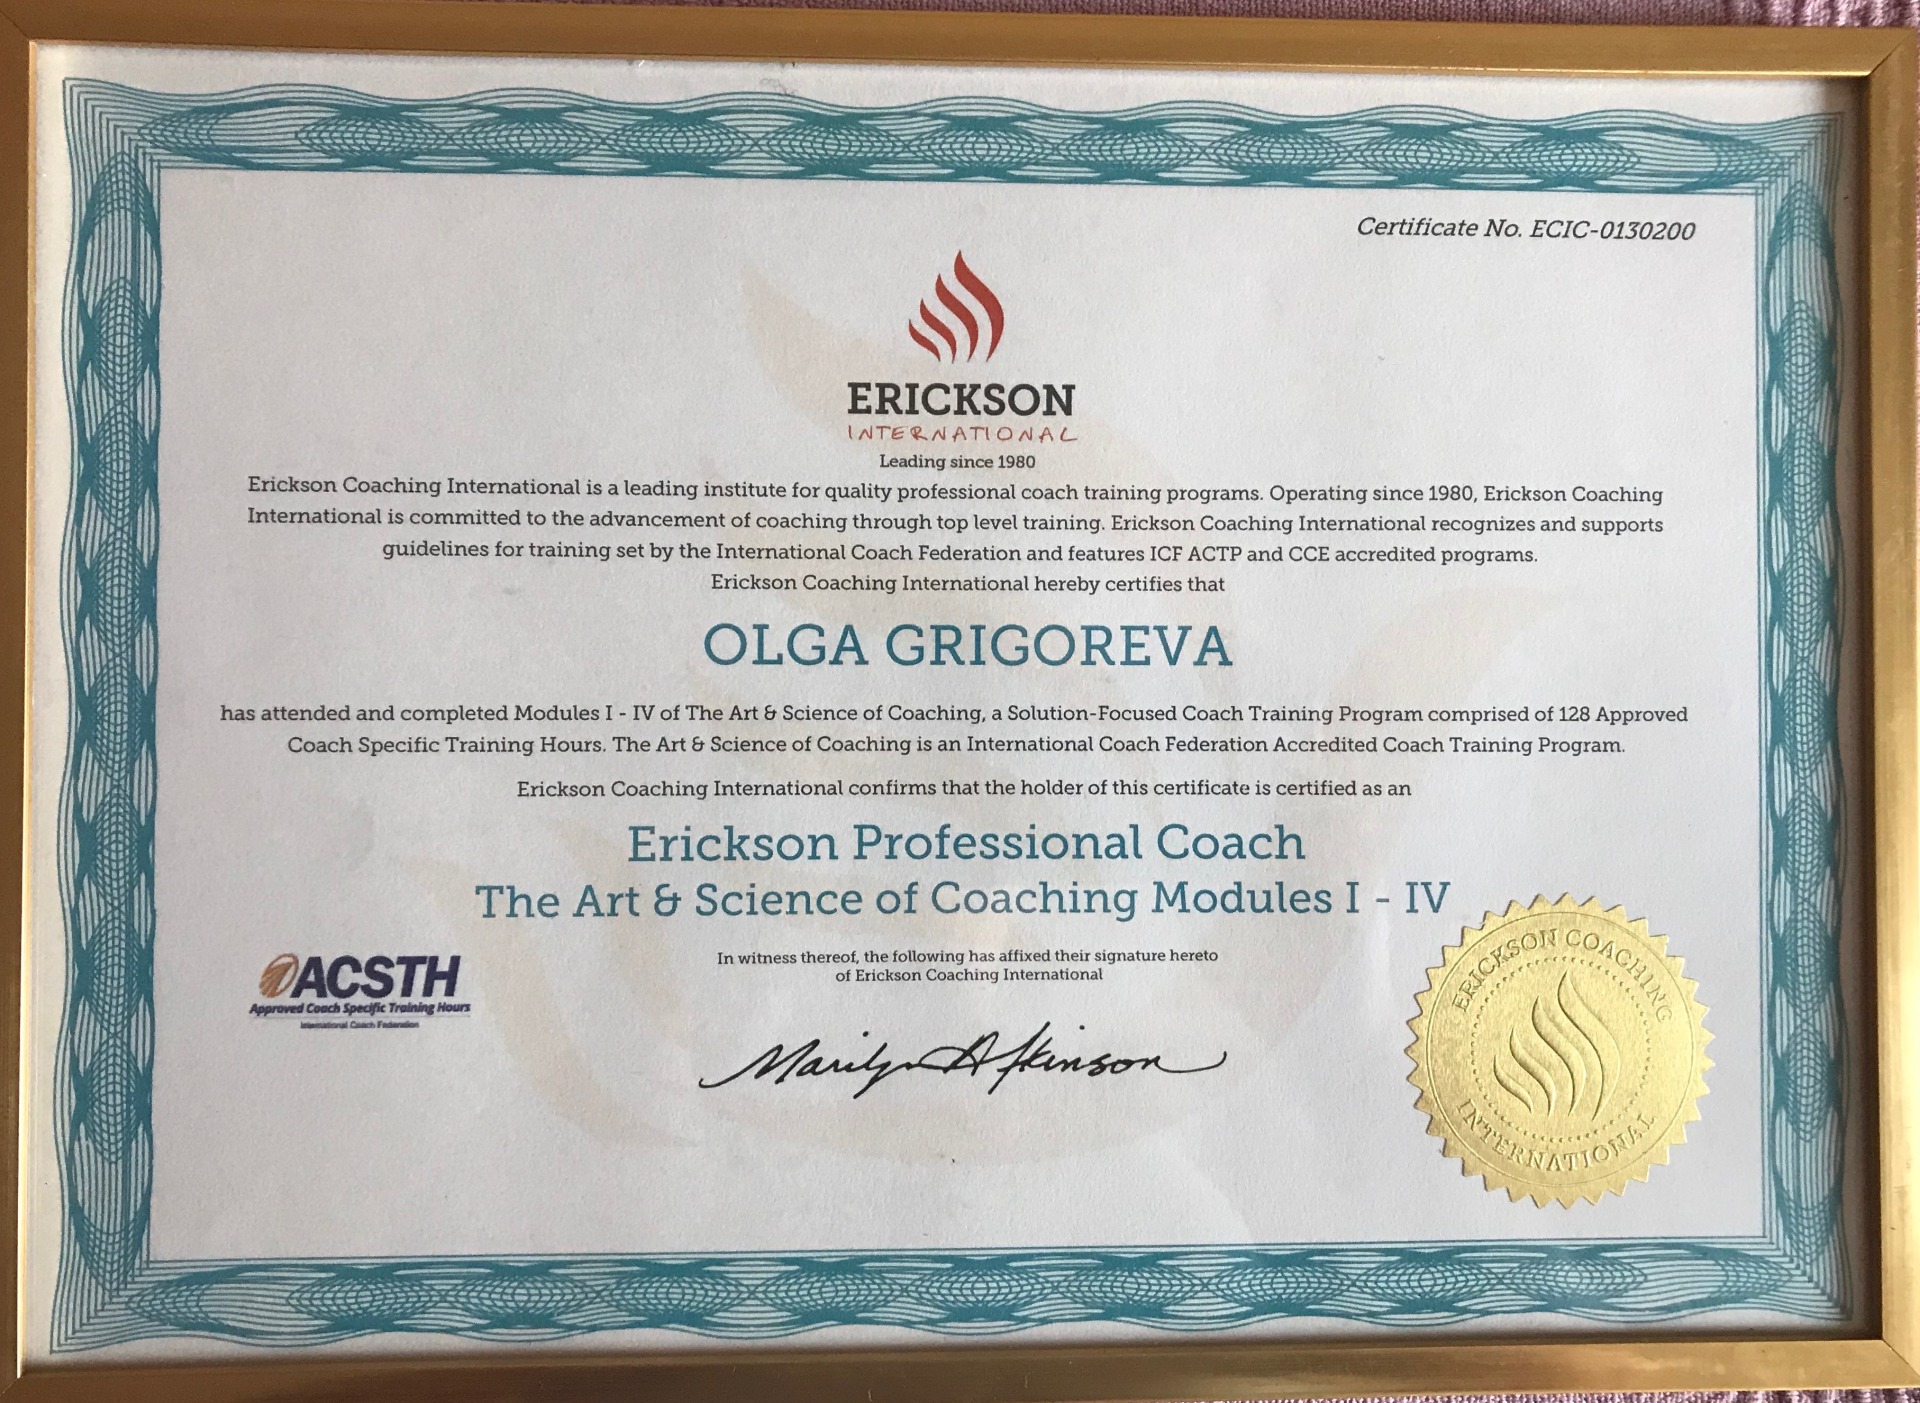 Certificate of Erickson Professional Coach